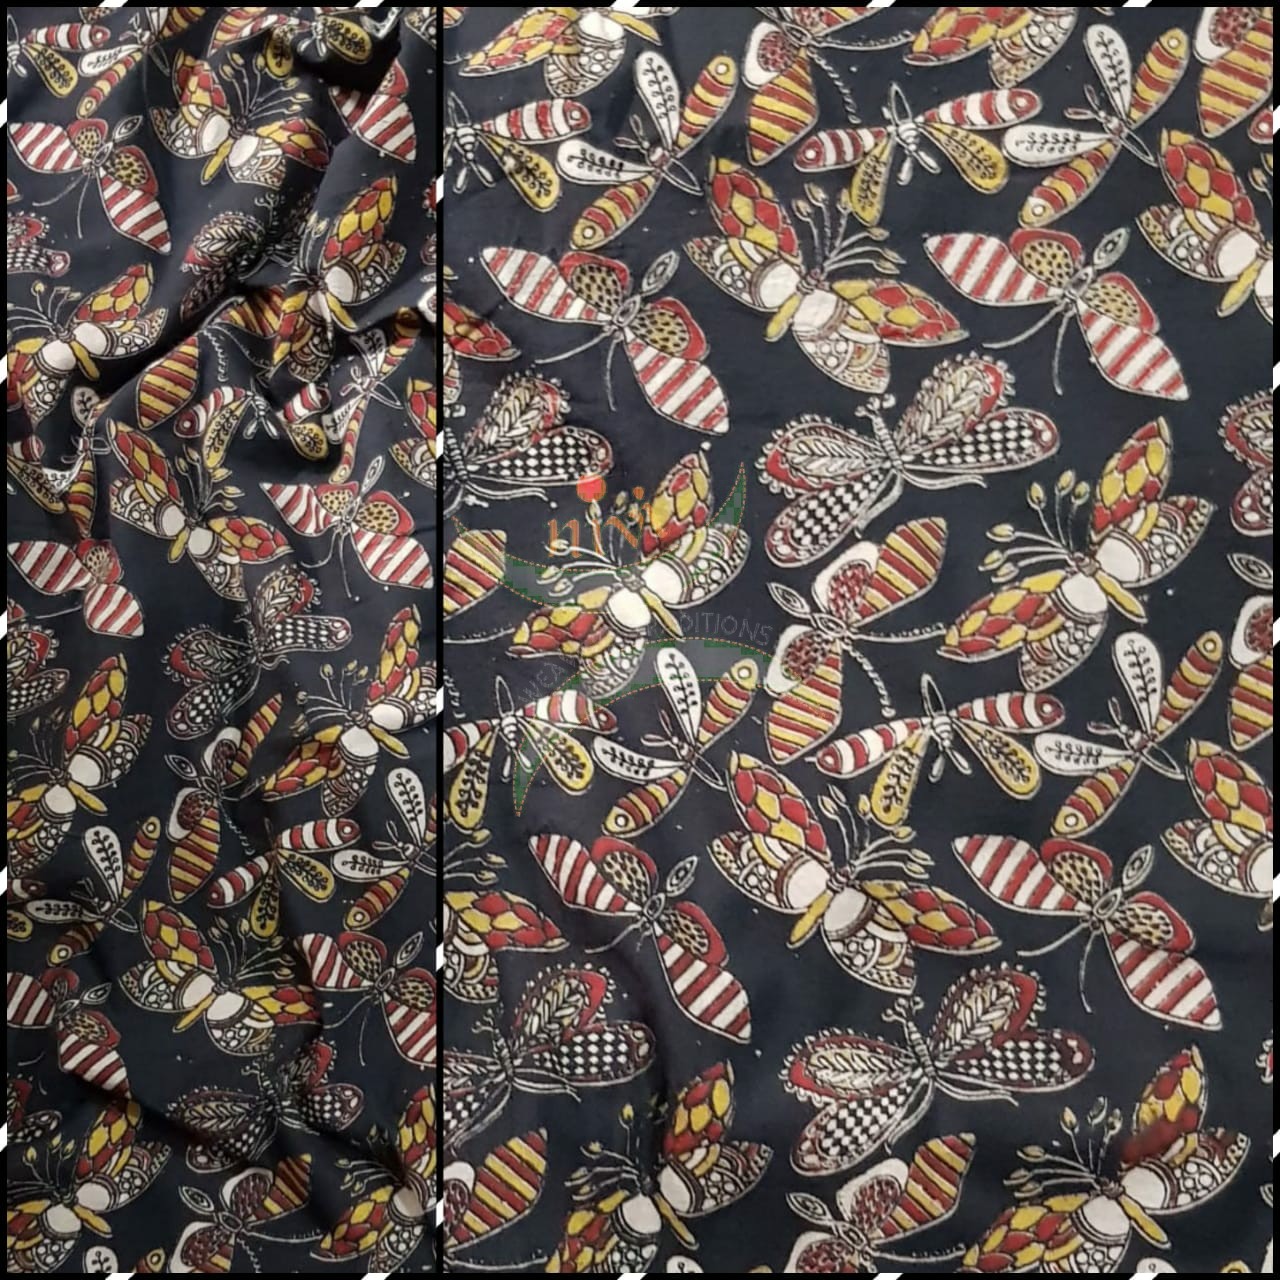 Black handloom cotton kalamkari with butterfly motifs